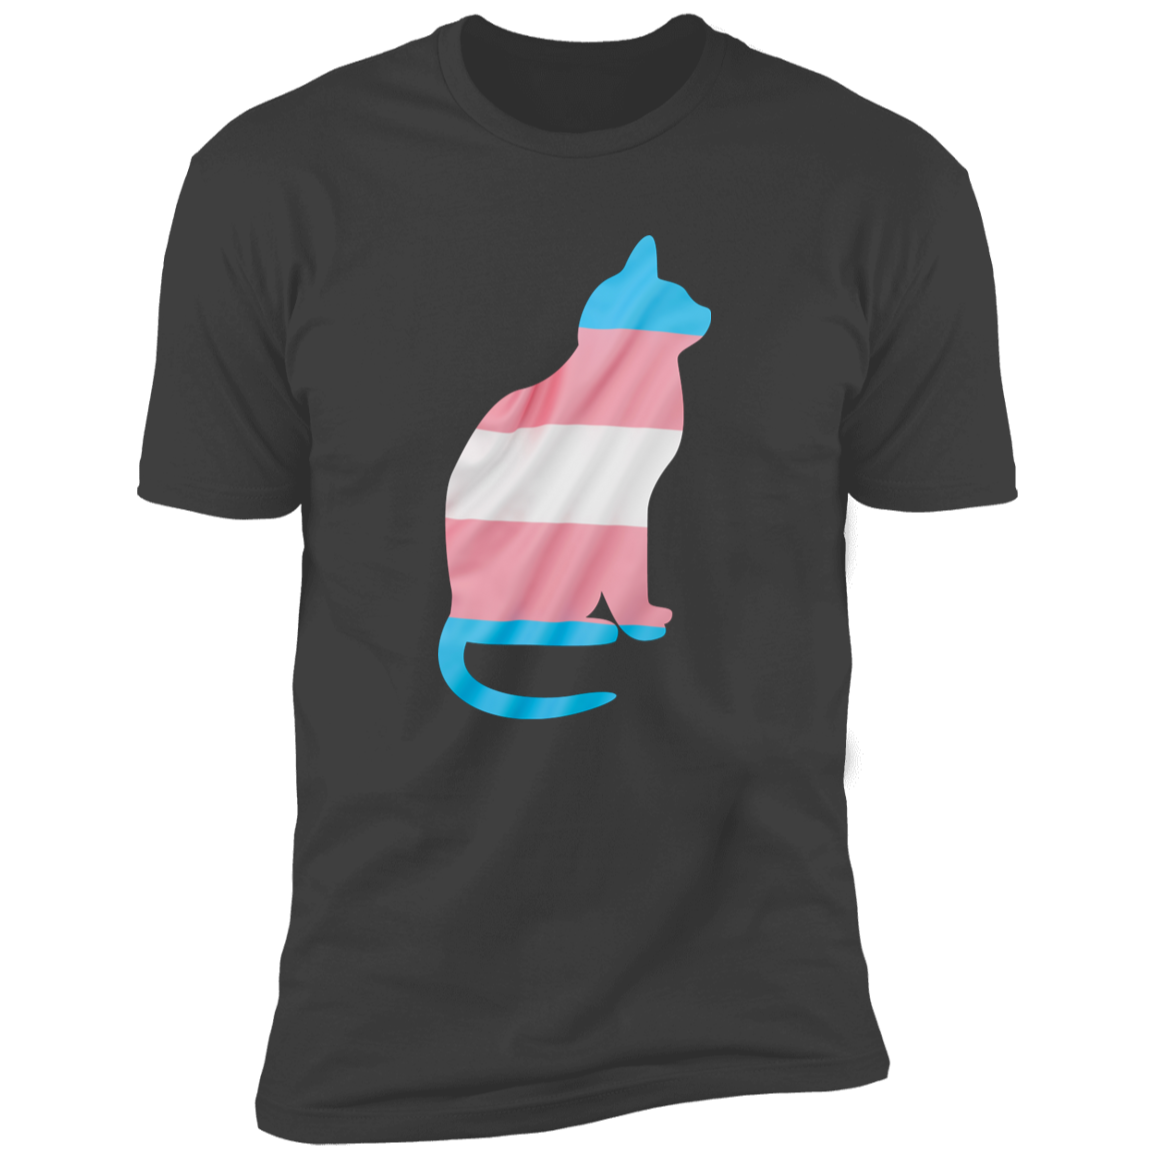 Trans Pride Cat Pride T-shirt, Trans Pride Cat Shirt for humans, in heavy metal gray